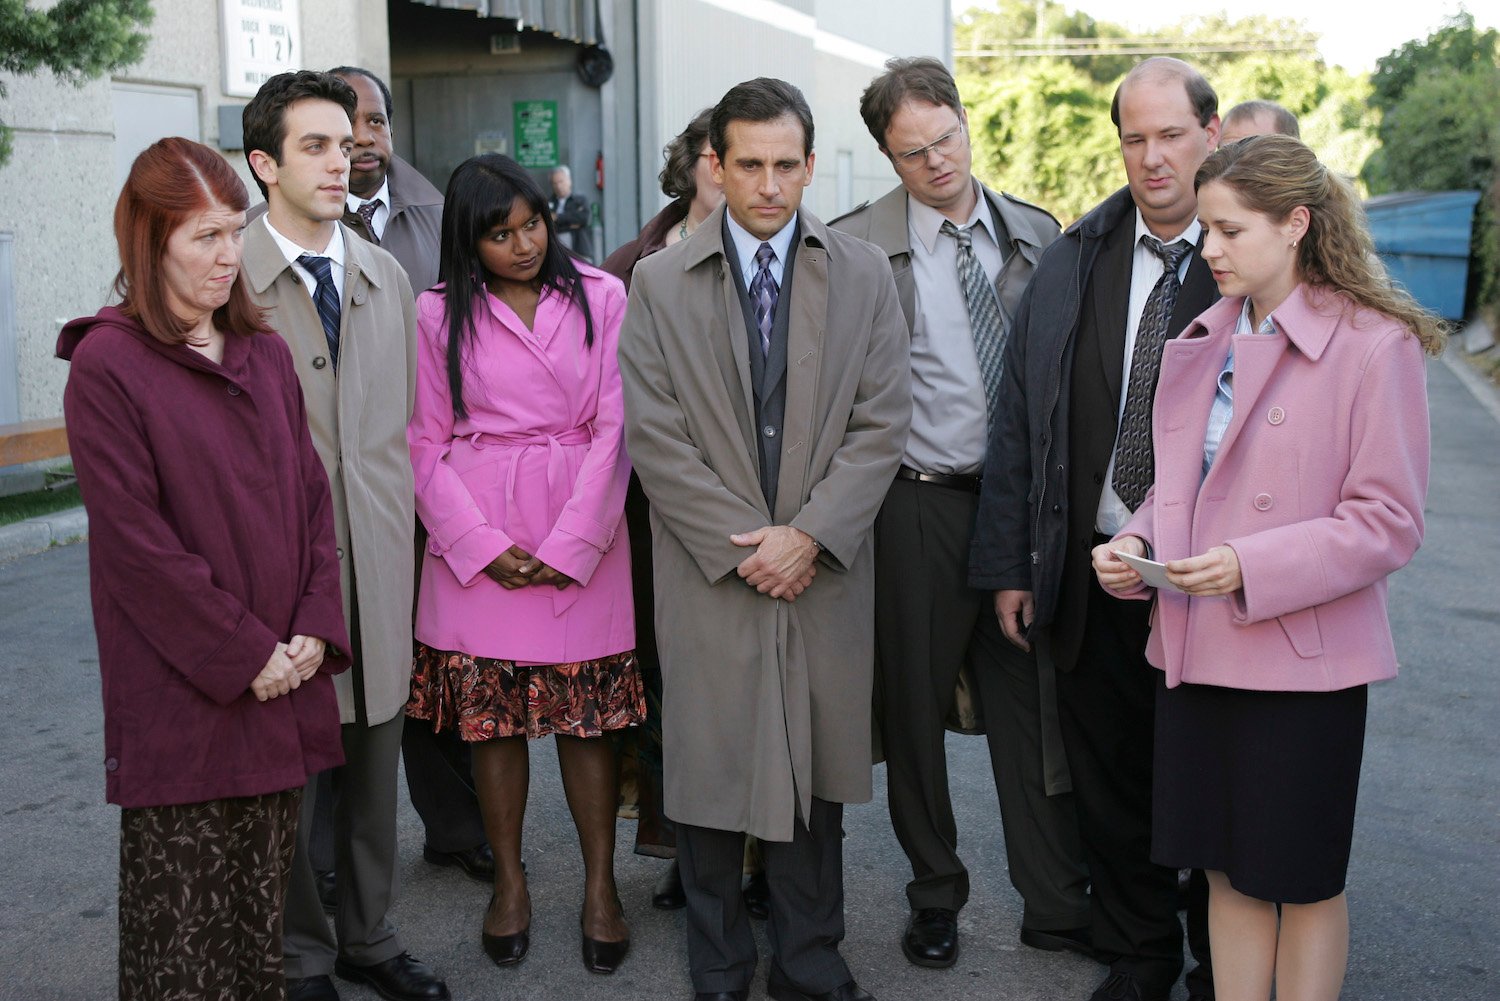 'The Office' cast: Kate Flannery, B.J. Novak, Leslie David Baker, Mindy Kaling, Steve Carell, Rainn Wilson, Brian Baumgartner, and Jenna Fischer 